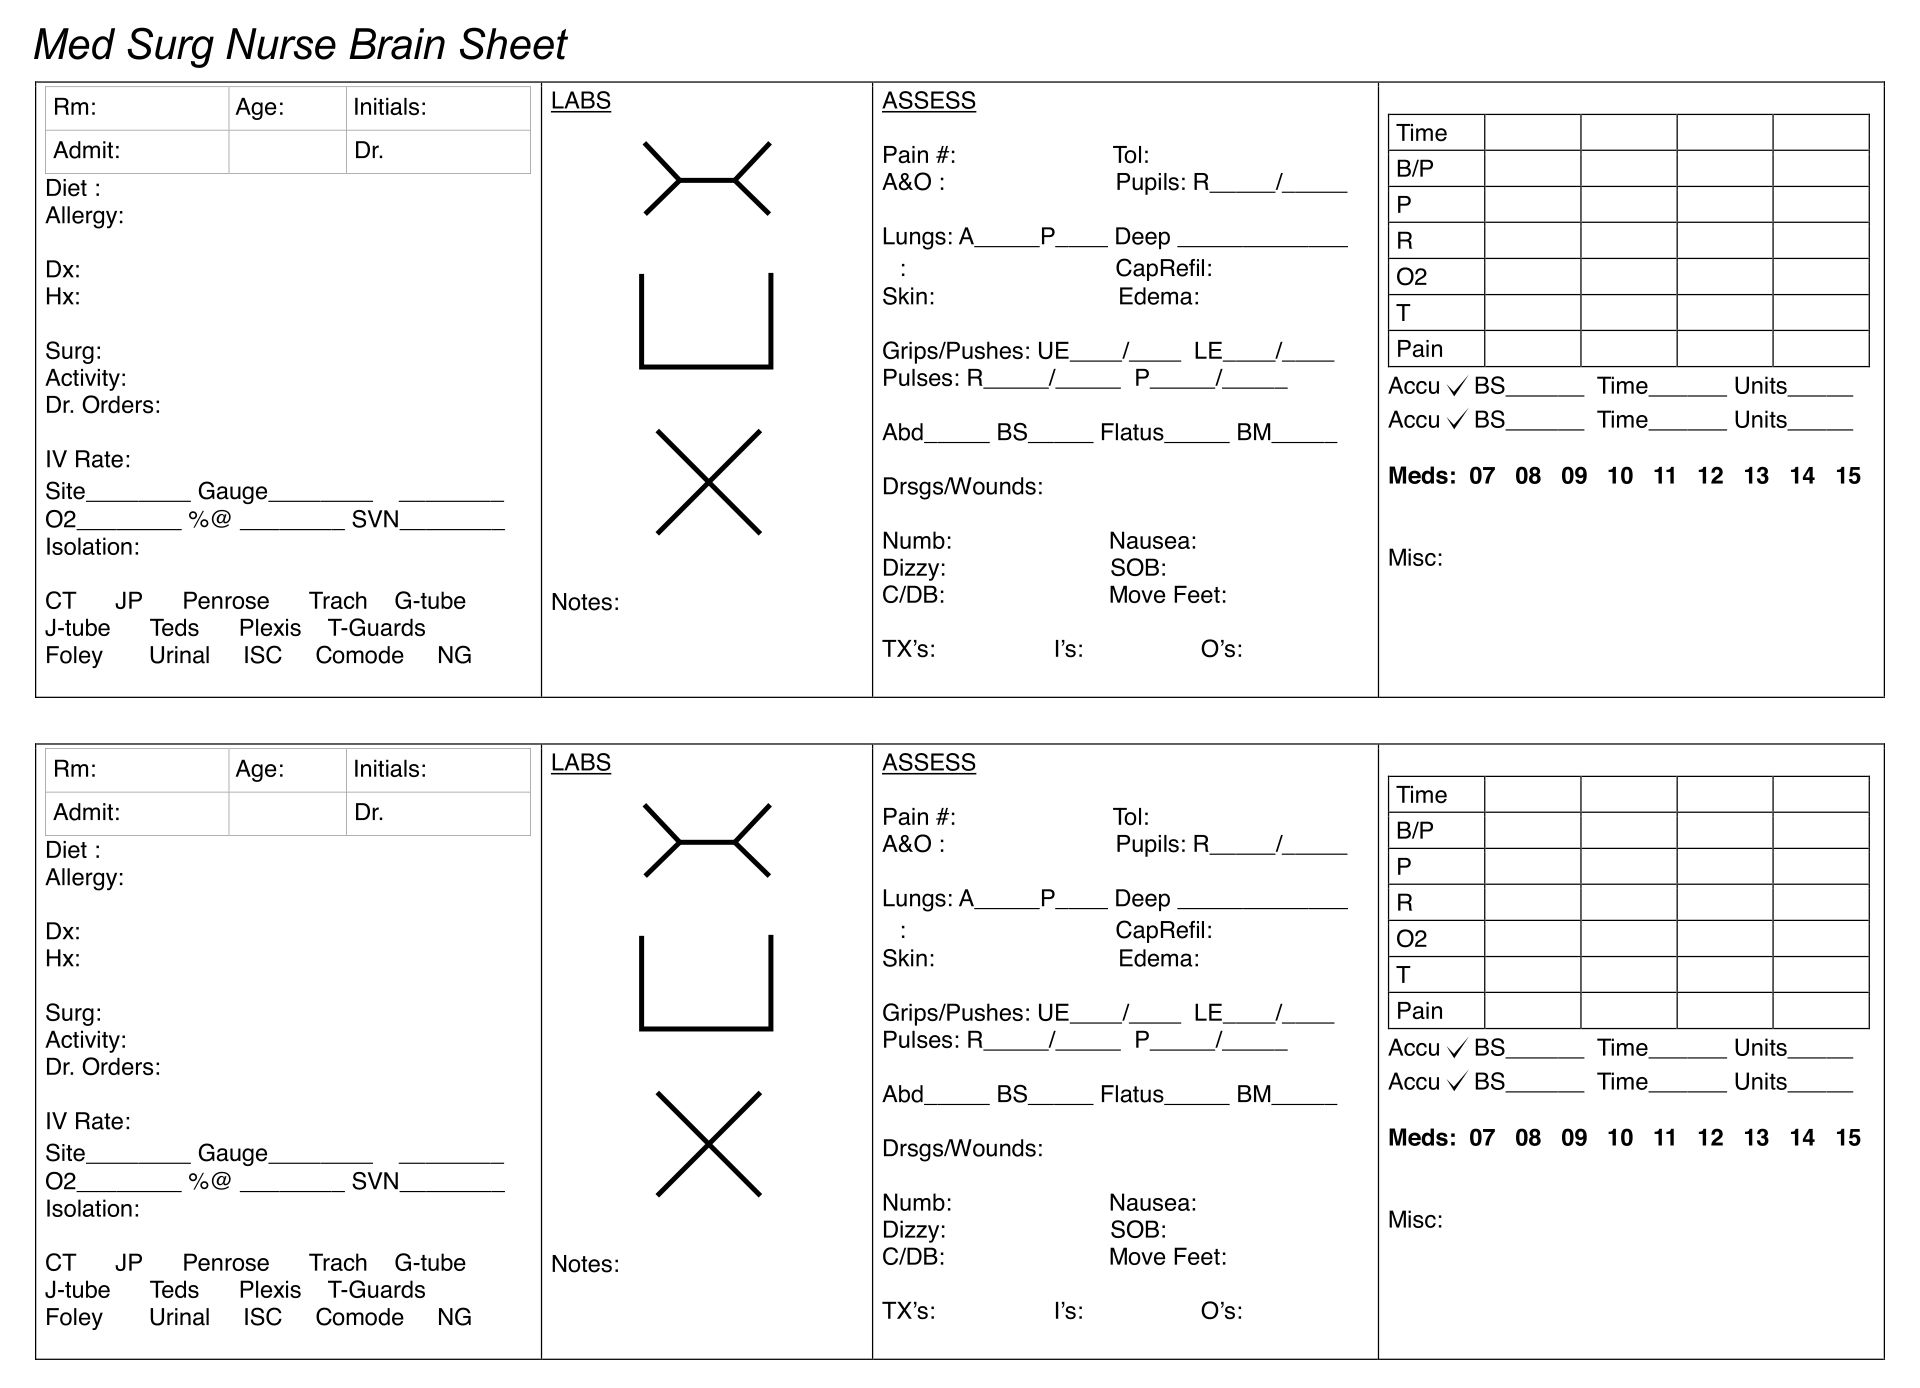 Med Surg Nurse Brain Sheet Template